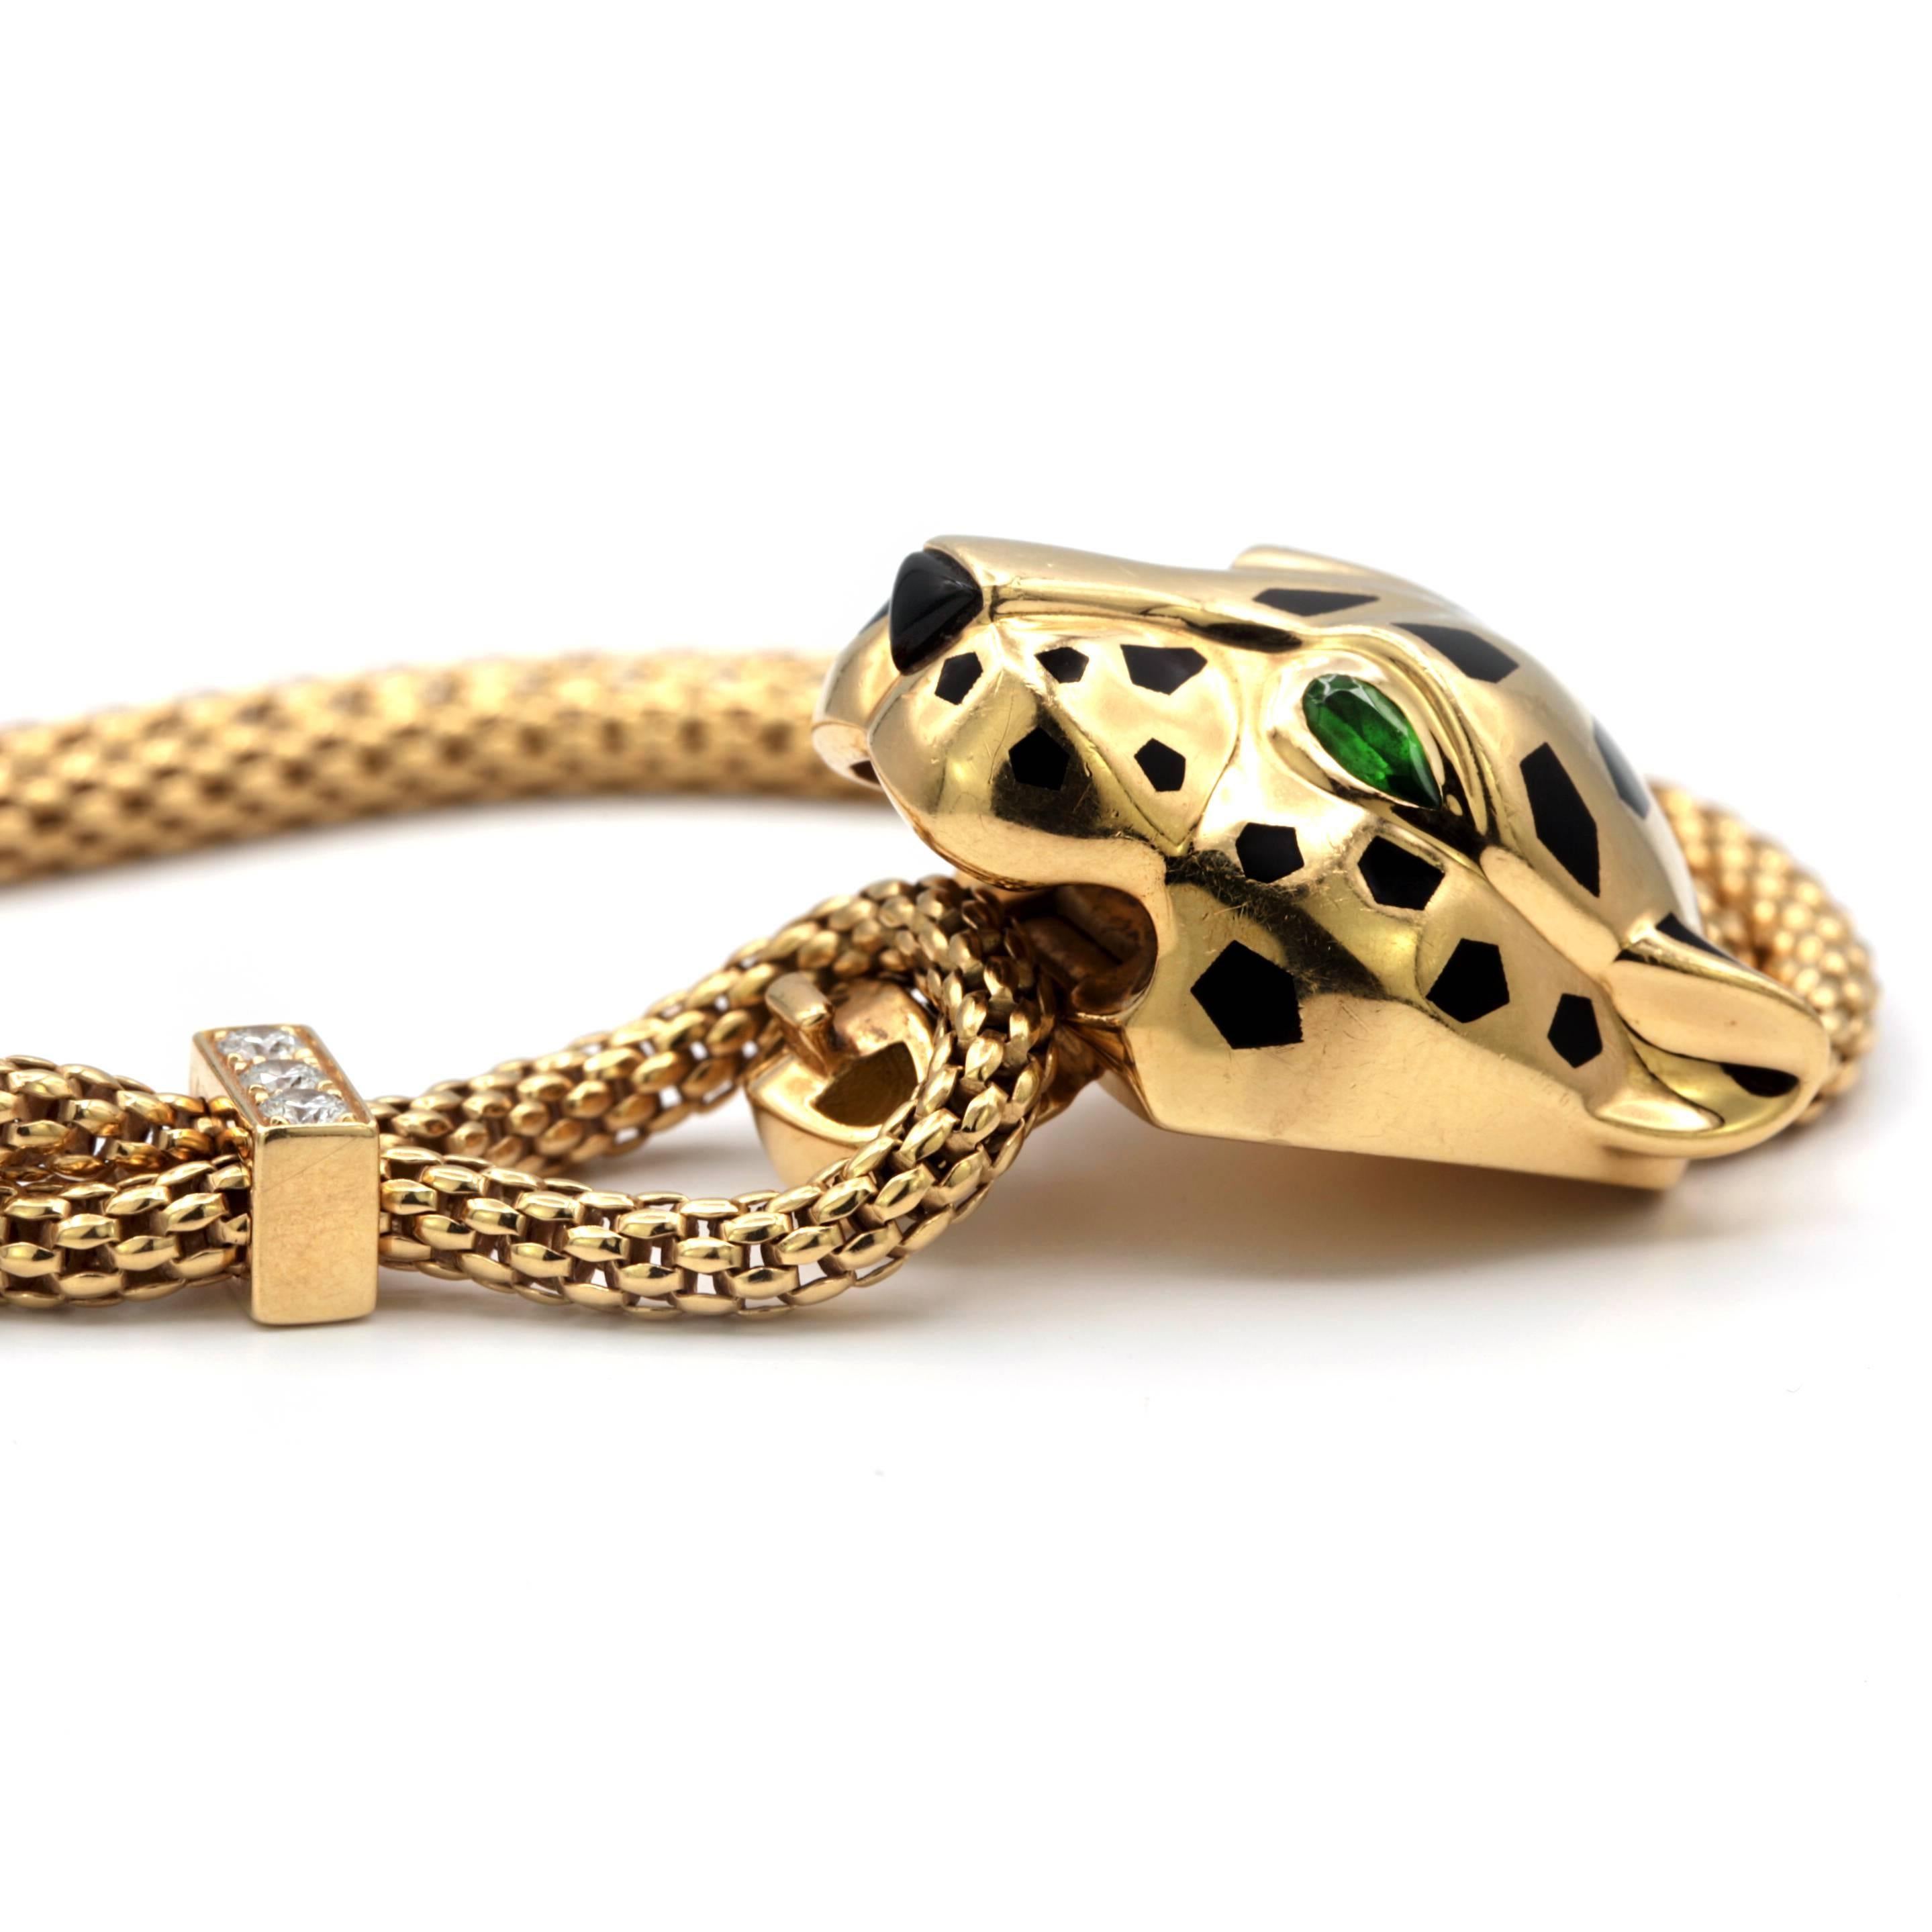 wallis simpson's panther bracelet